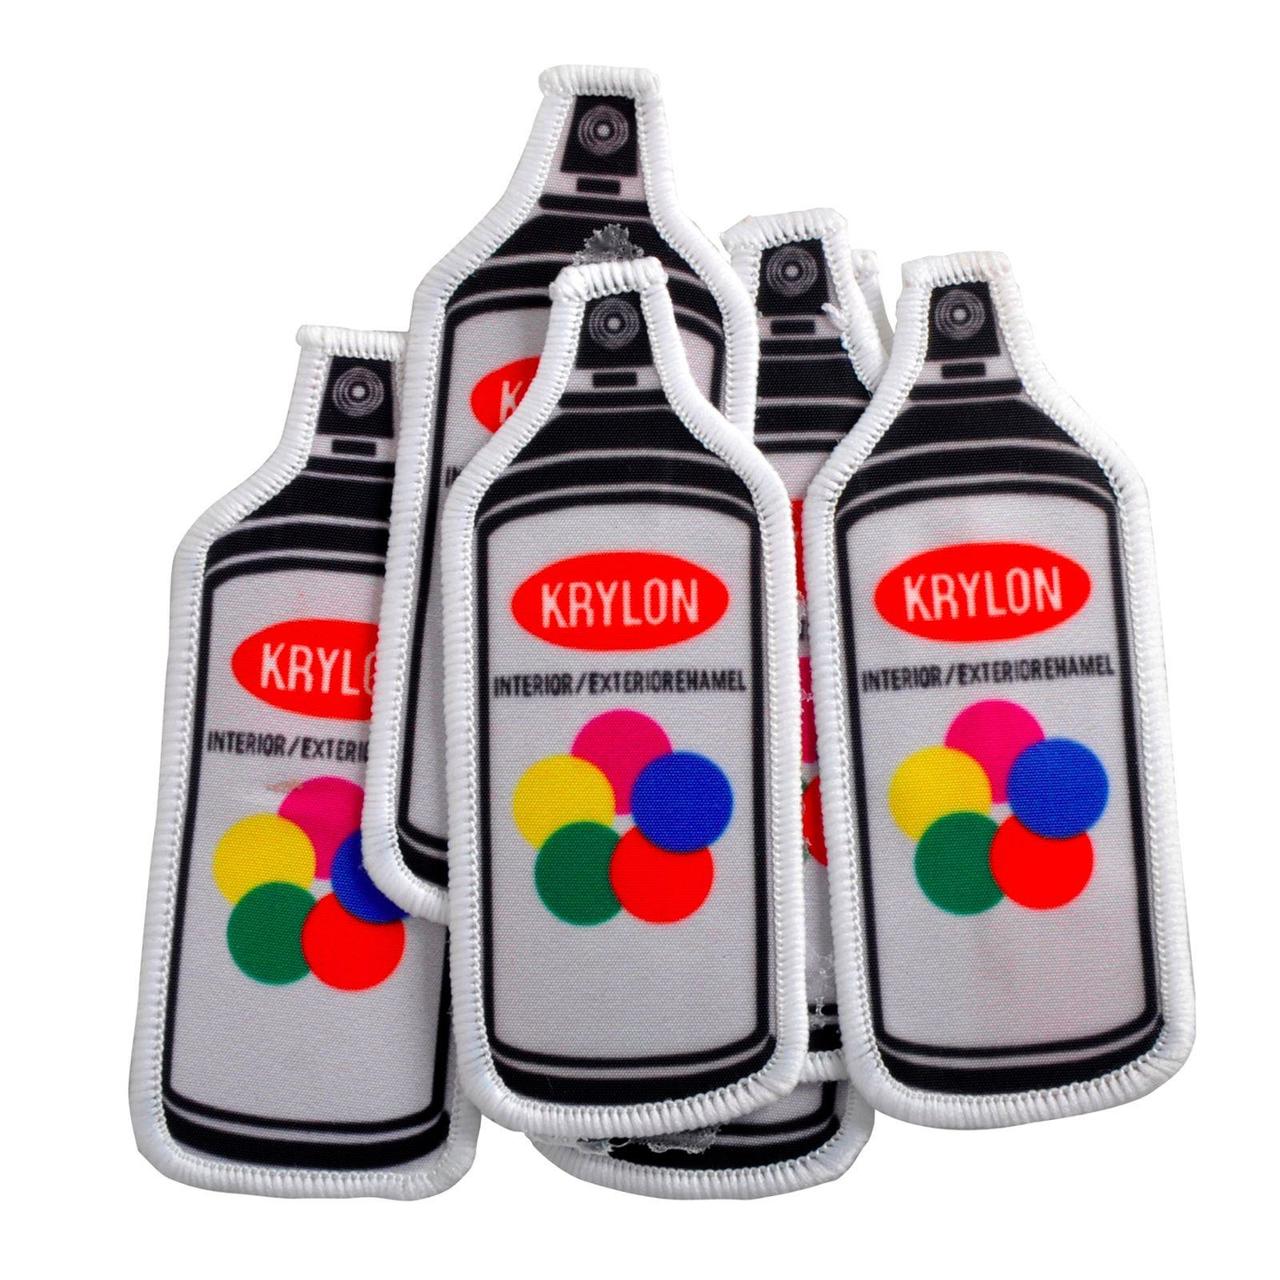 Custom Graffiti style Krylon spray paint iron on 5pc pack
#graffiti #graff #streetart #art
http://www.ebay.com/itm/SPRAY-PAINT-classic-IRON-oN-PATCHES-5pc-pack-easy-to-use-Graff-Life-Style-Patch-/181890482338?ssPageName=STRK:MESE:IT http://t.co/3u52RQwEDQ